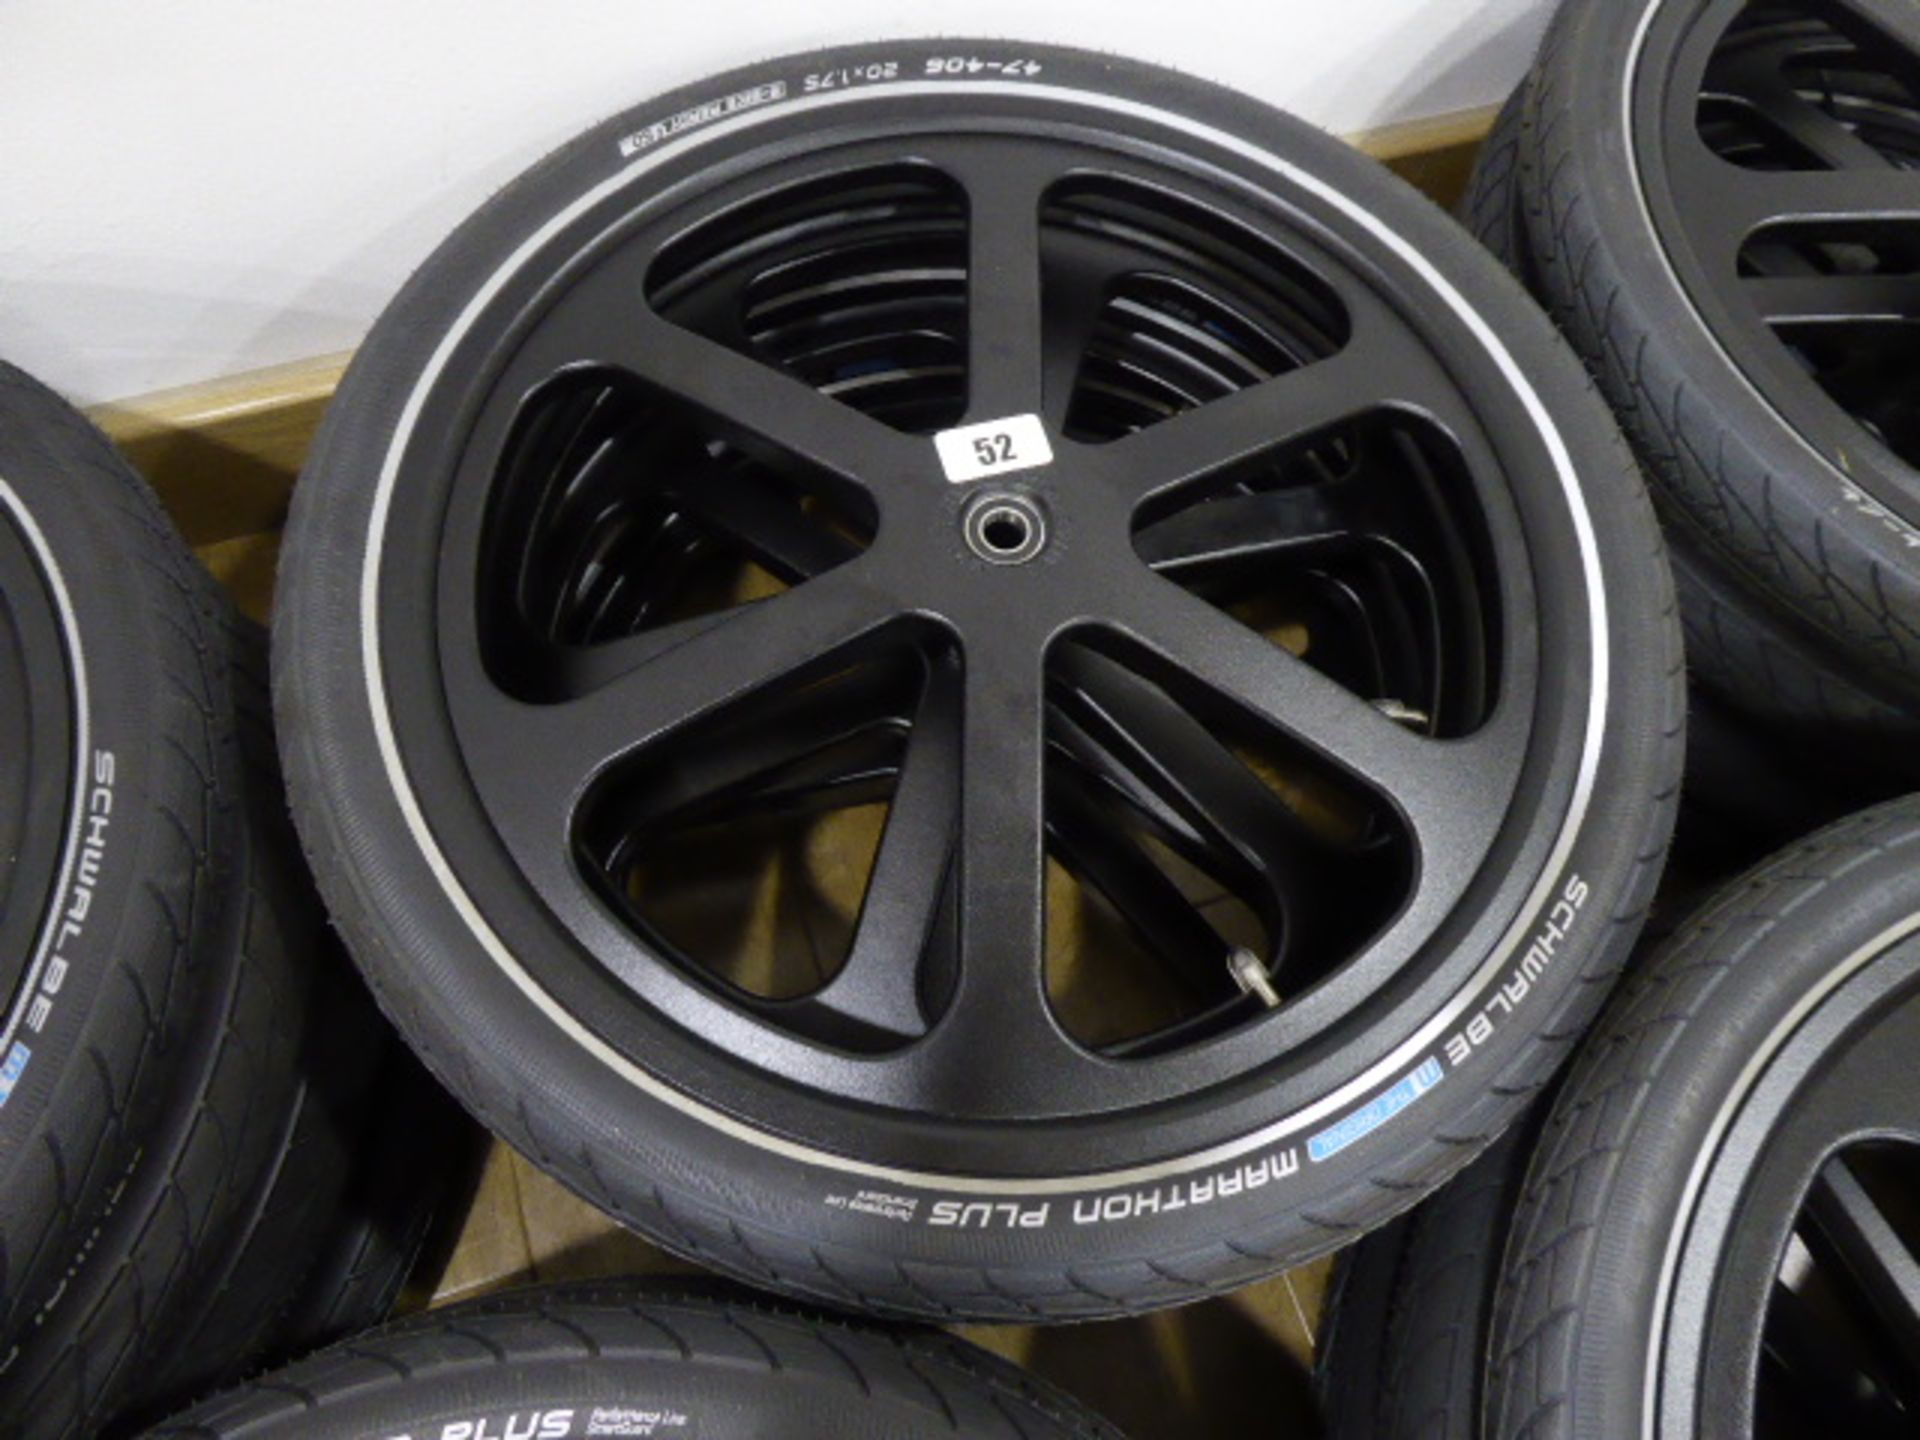 Set of 4 Samagaga 6-spoke 20'' wheels with Schwalbe Marathon Plus tyres and inner tubes